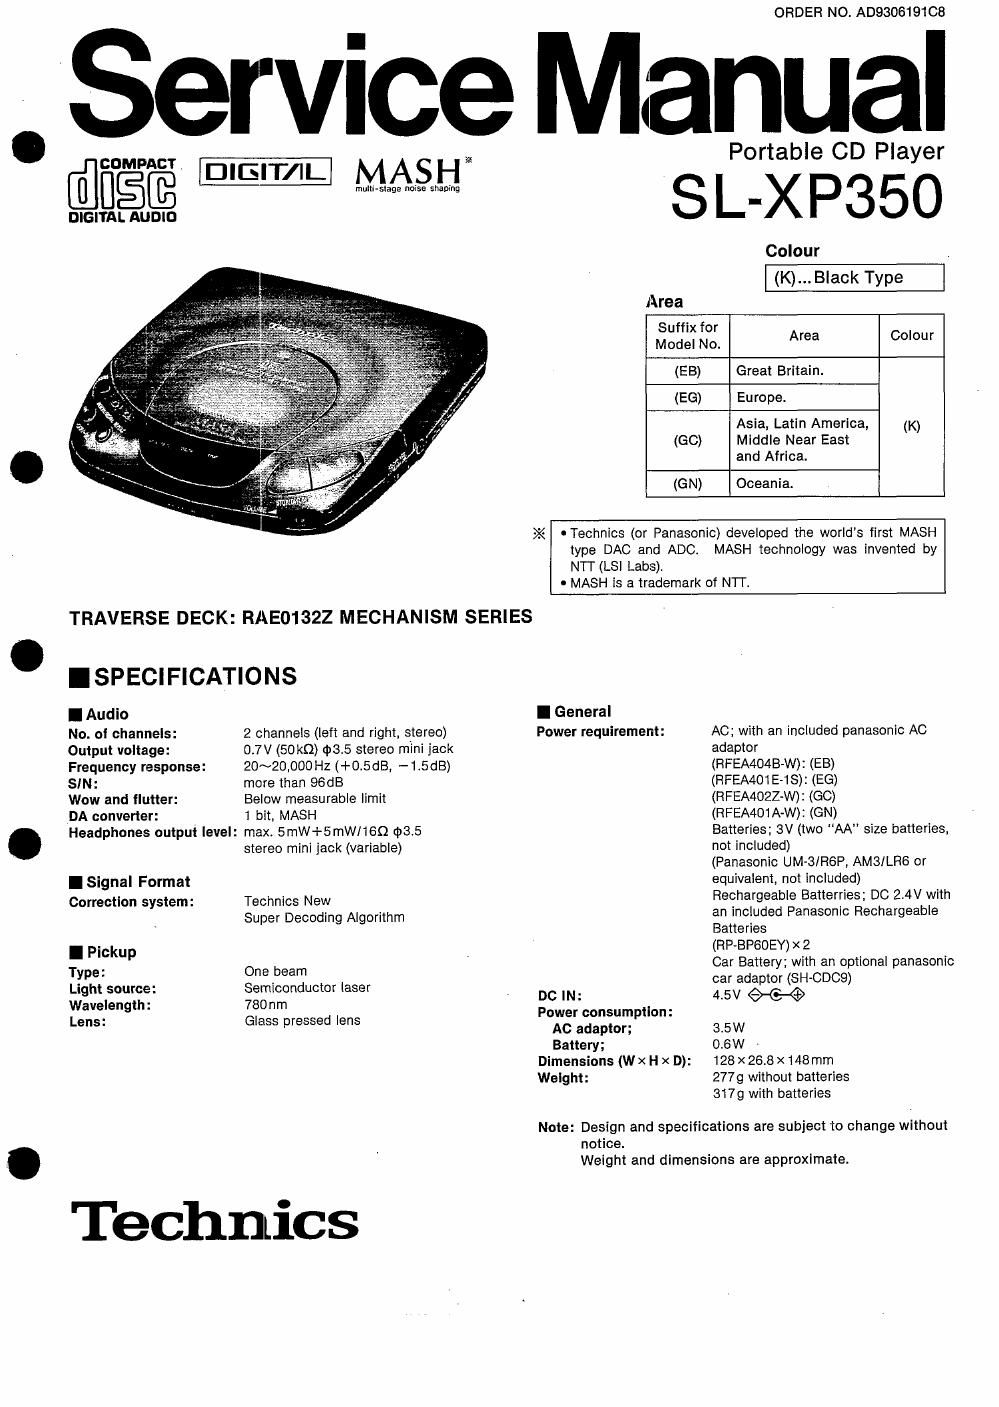 panasonic sl xp 350 service manual